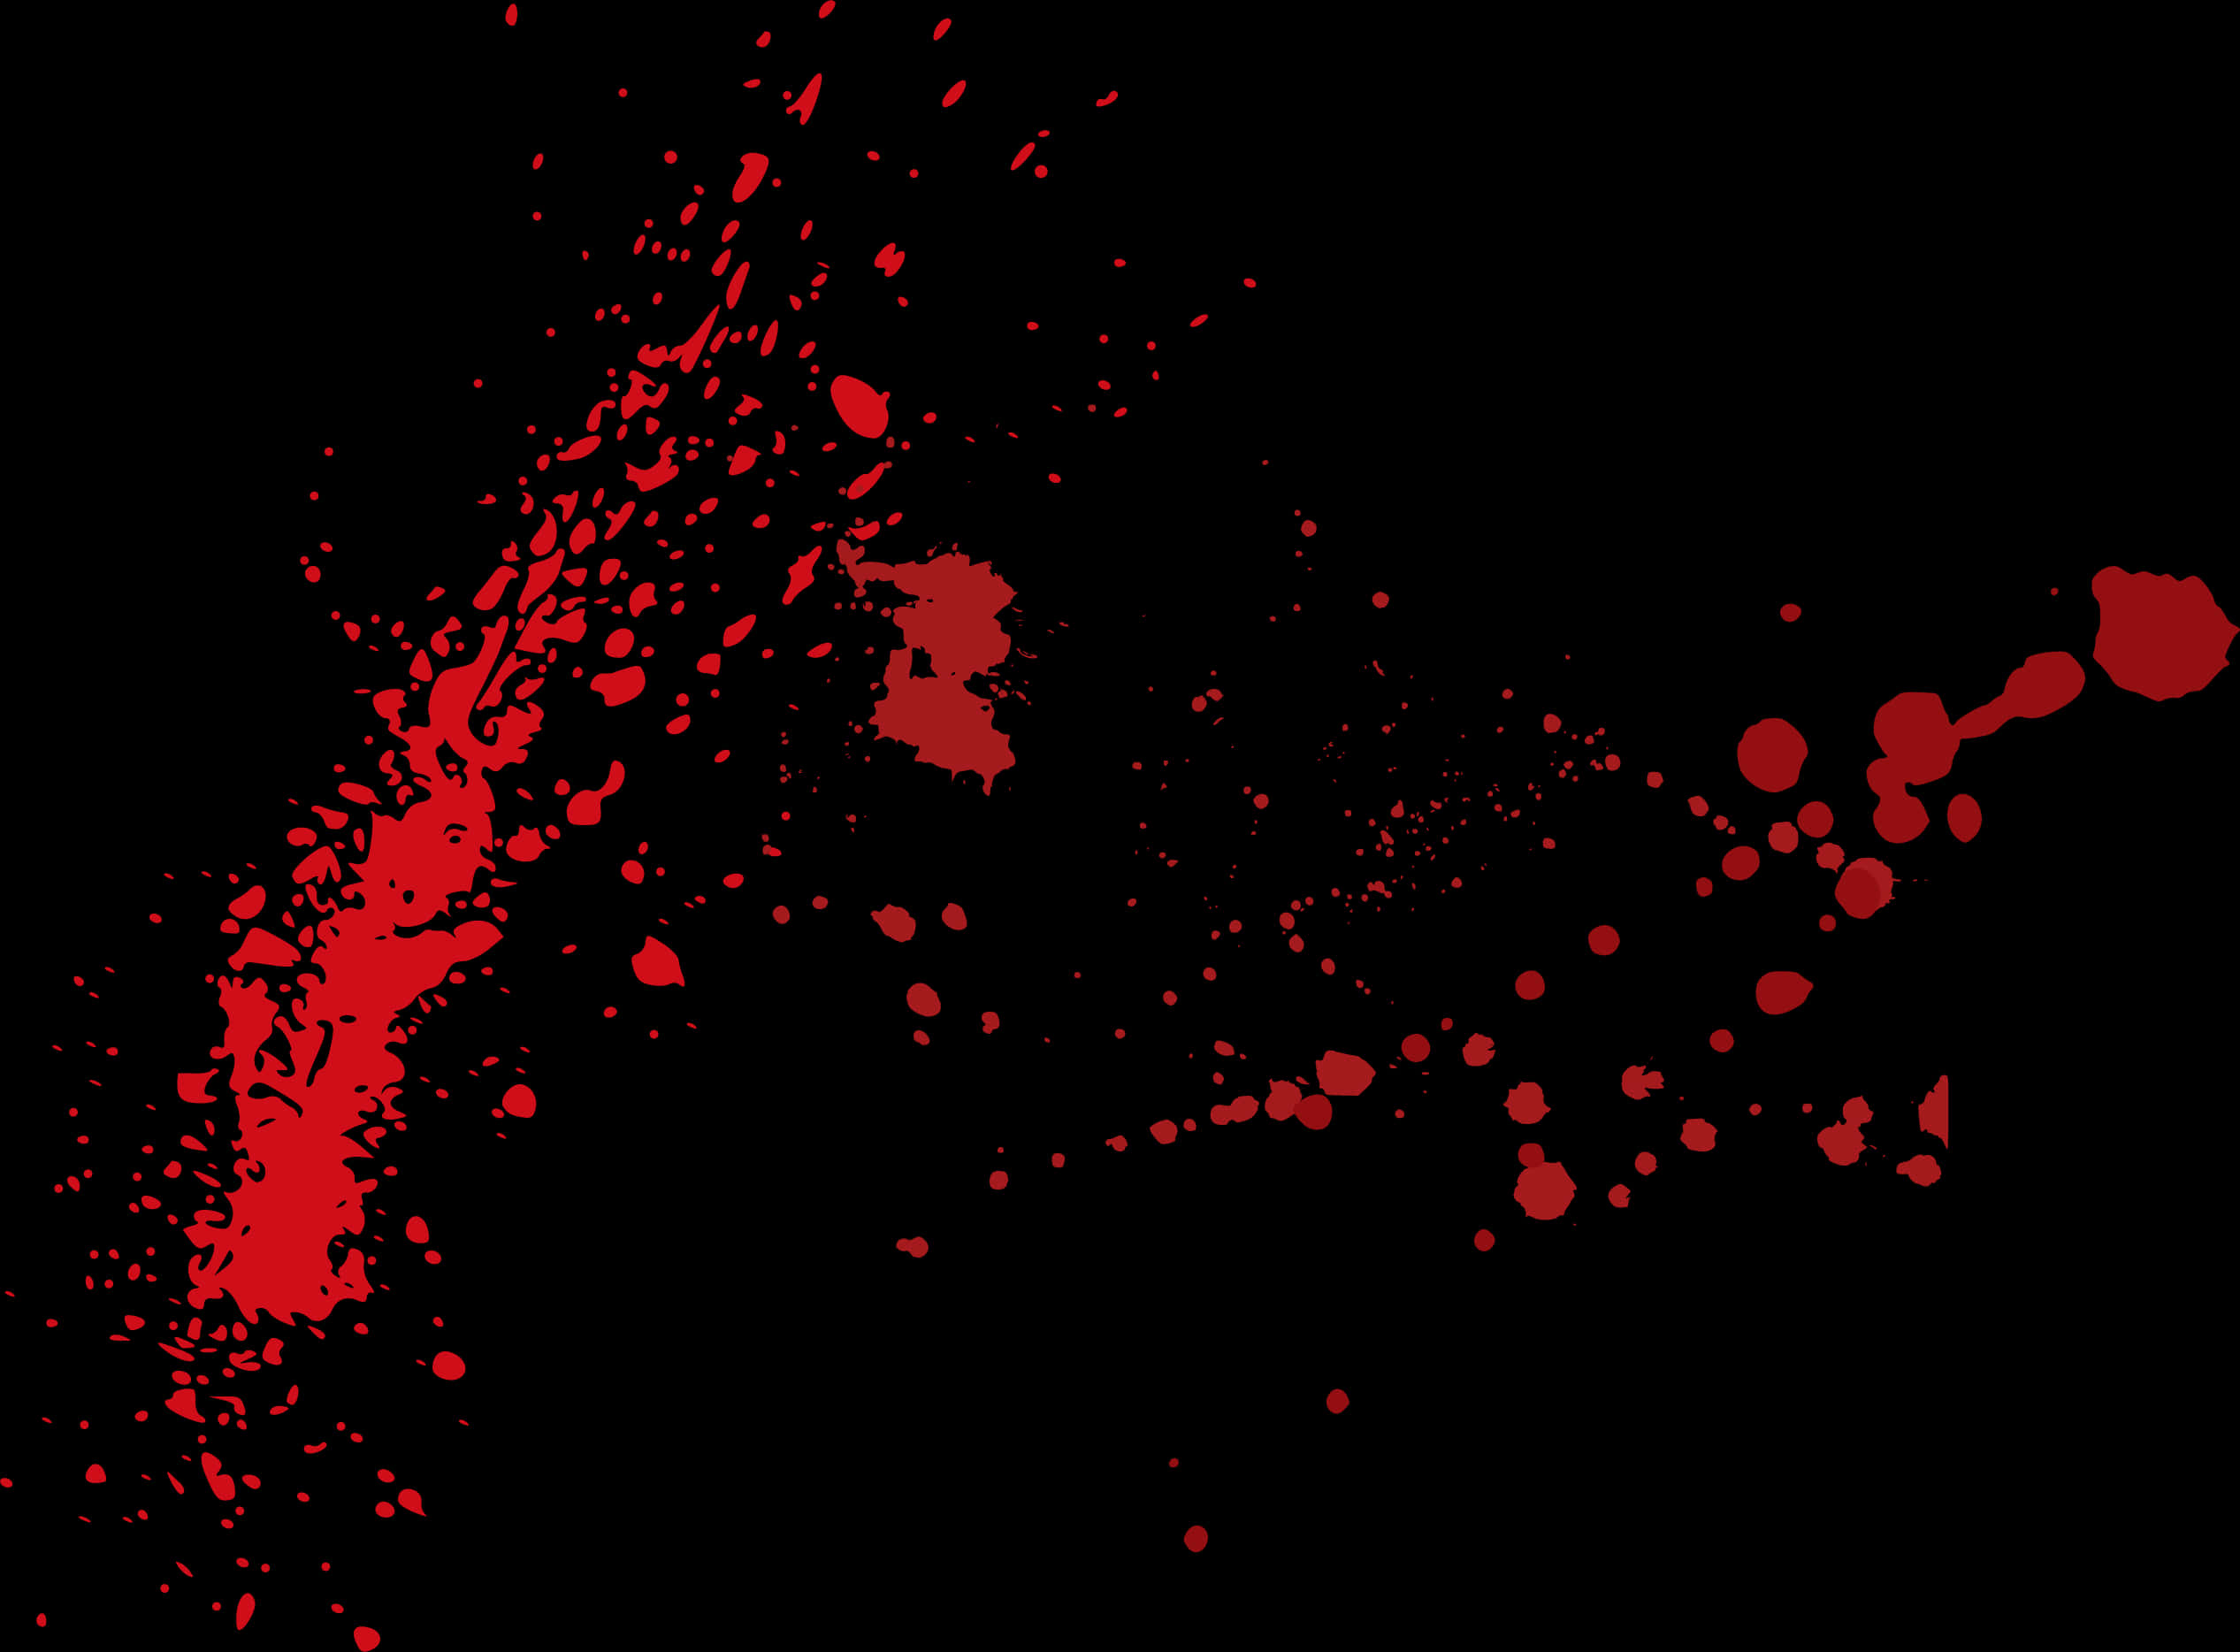 Abstract Blood Splatter Pattern